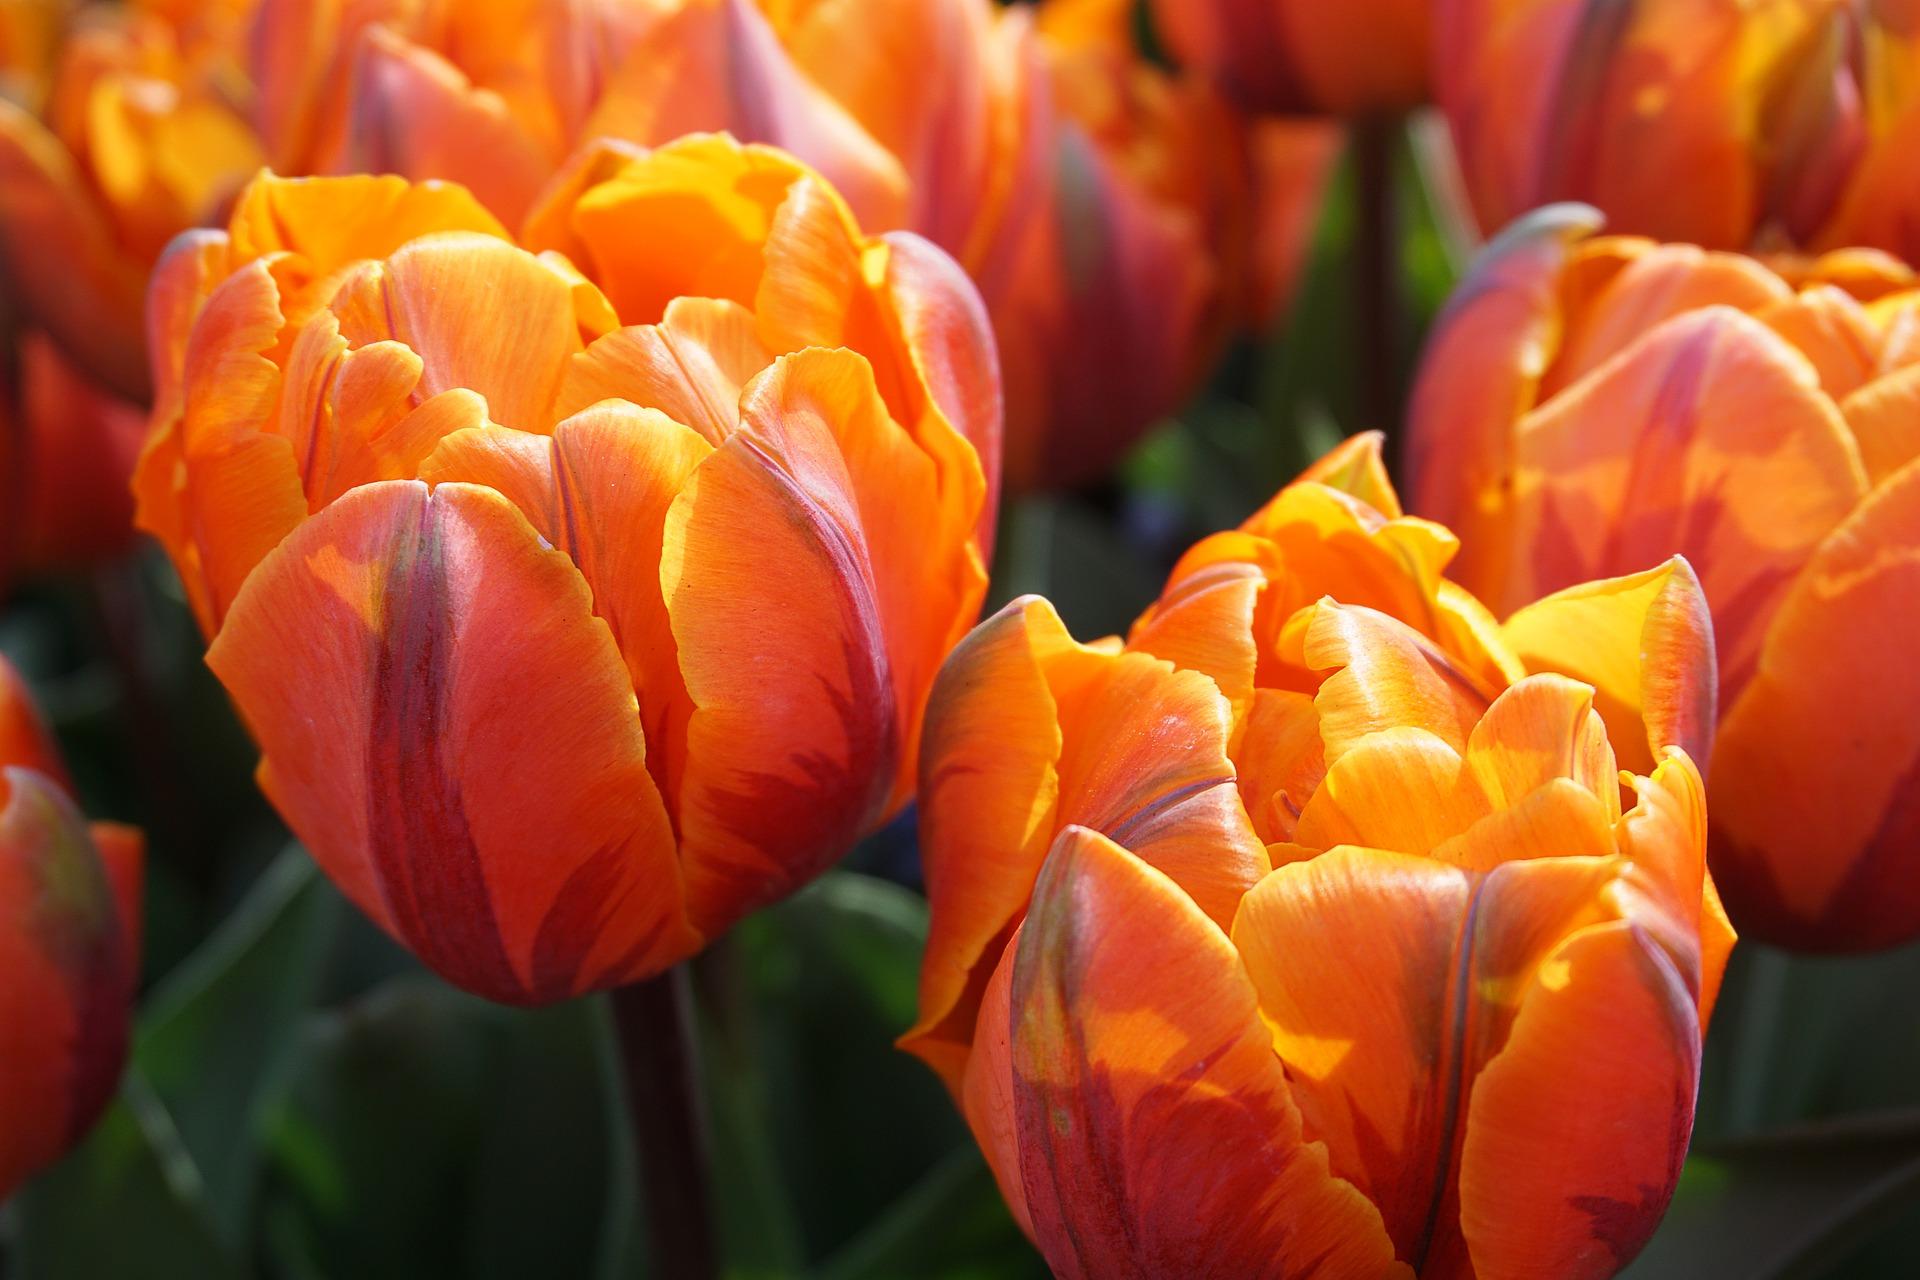 Tulip Double Late 'Orange Princess' - Tulip from Leo Berbee Bulb Company